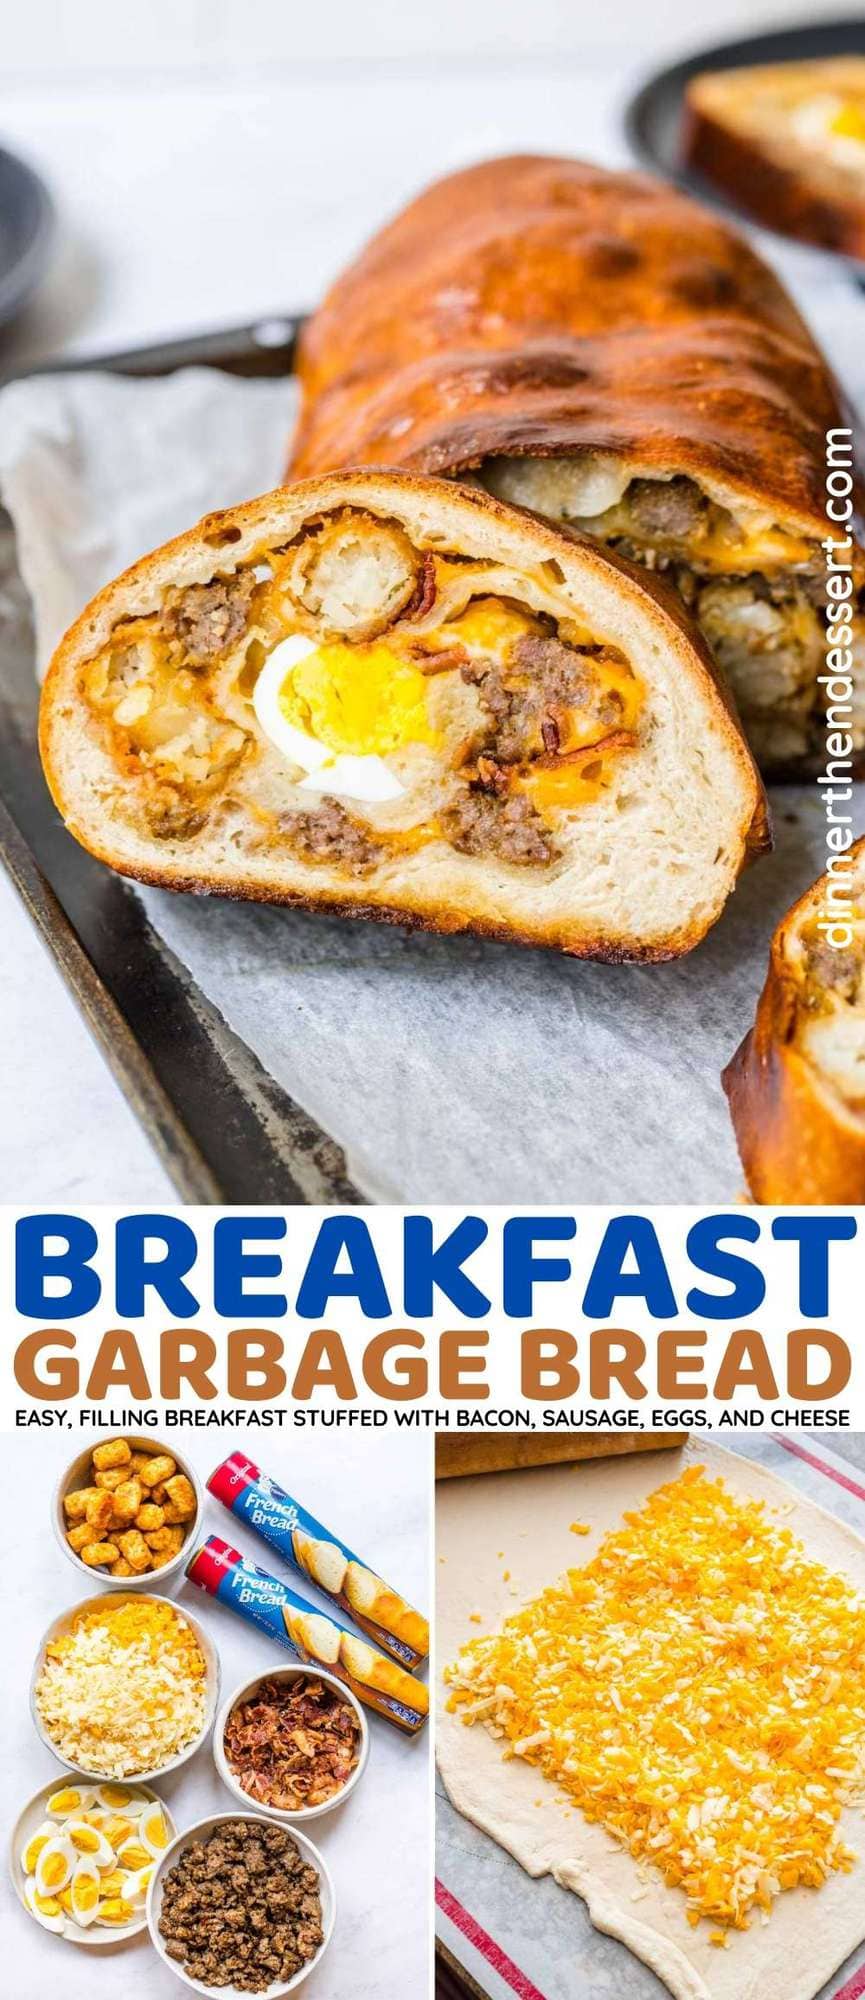 Breakfast Garbage Bread collage